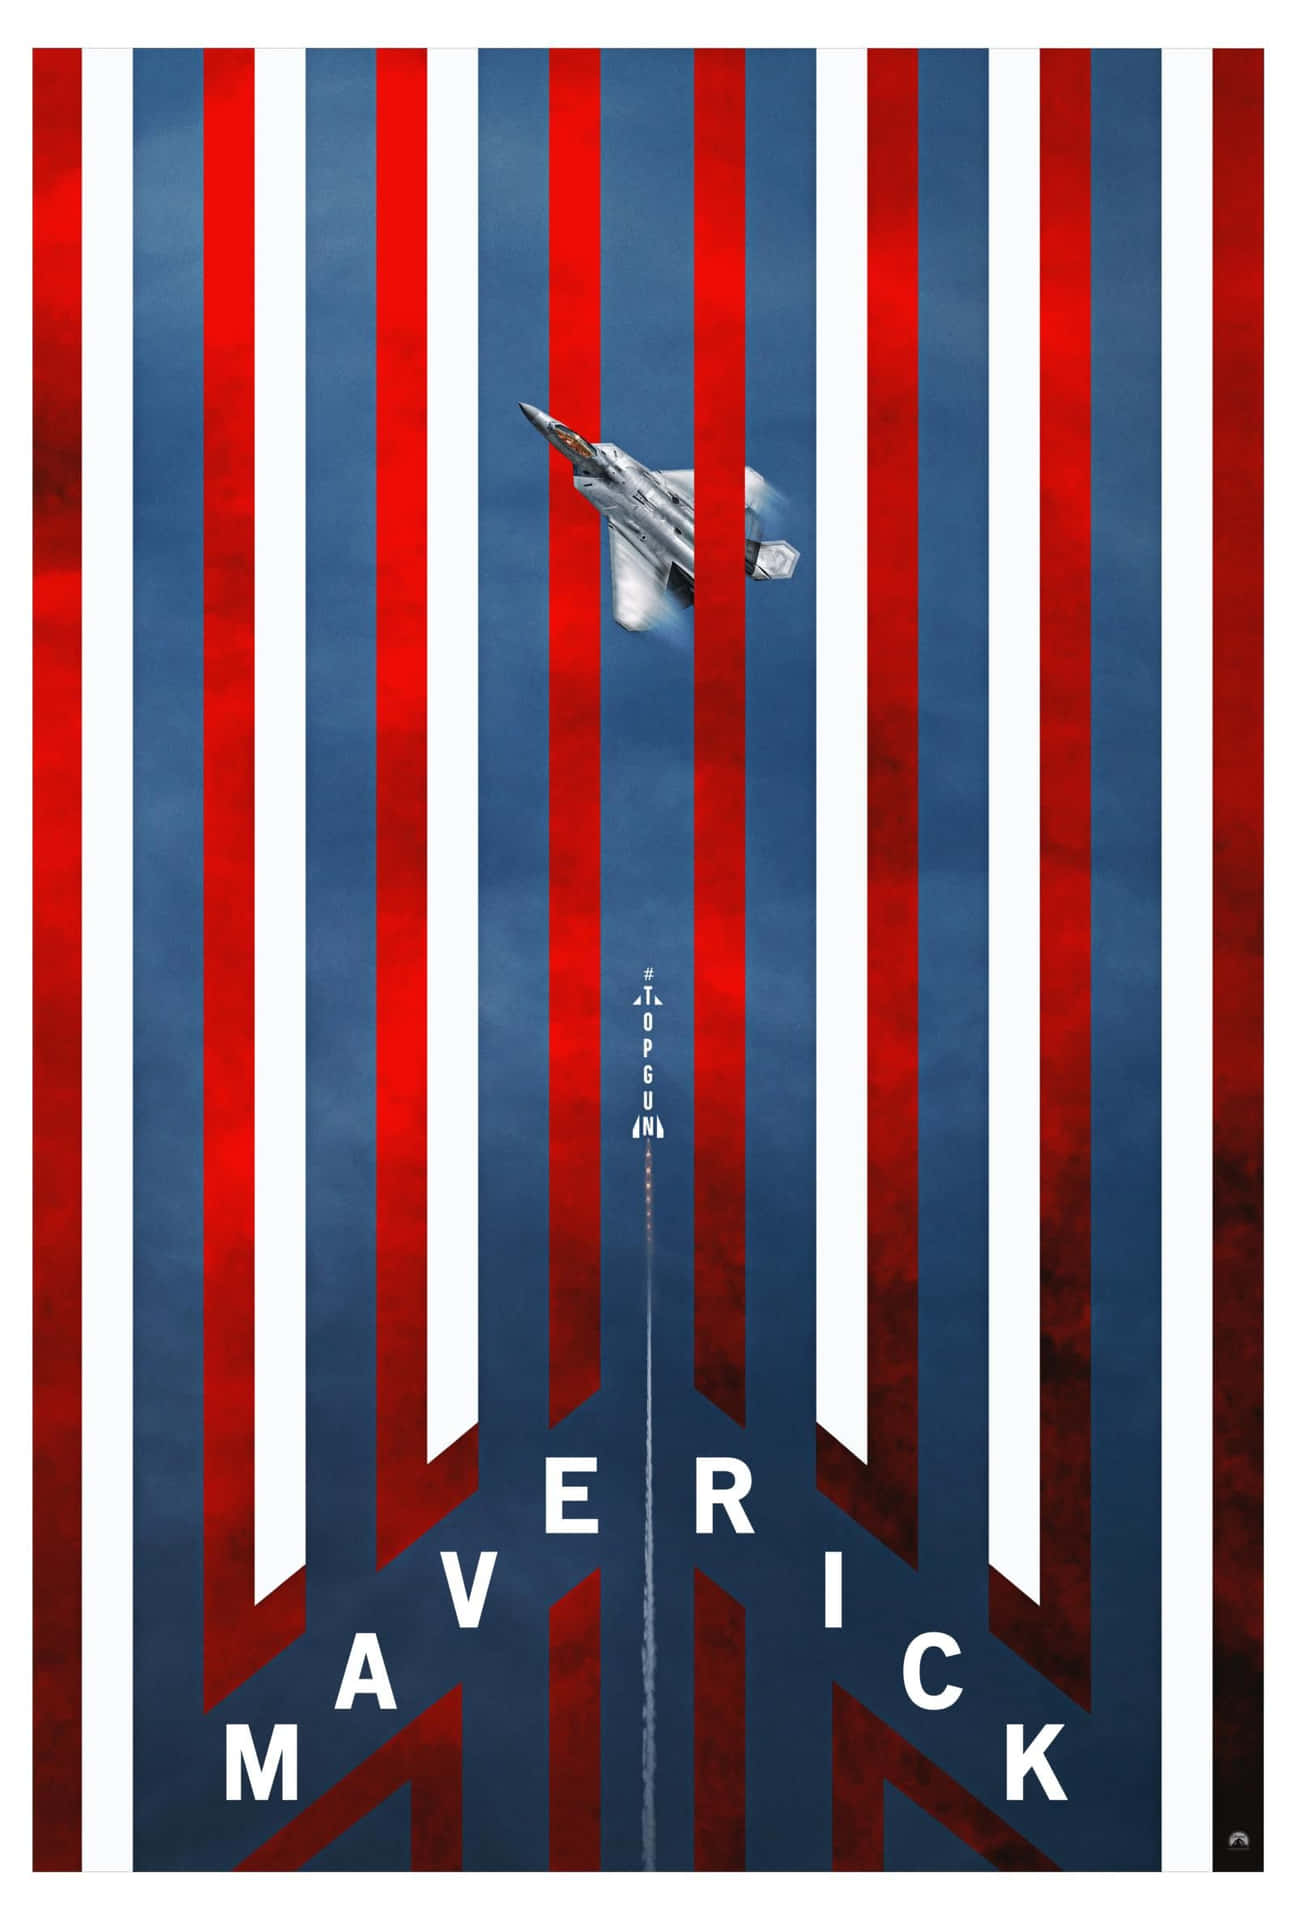 Top Gun Maverick 2022 Movie Poster Background